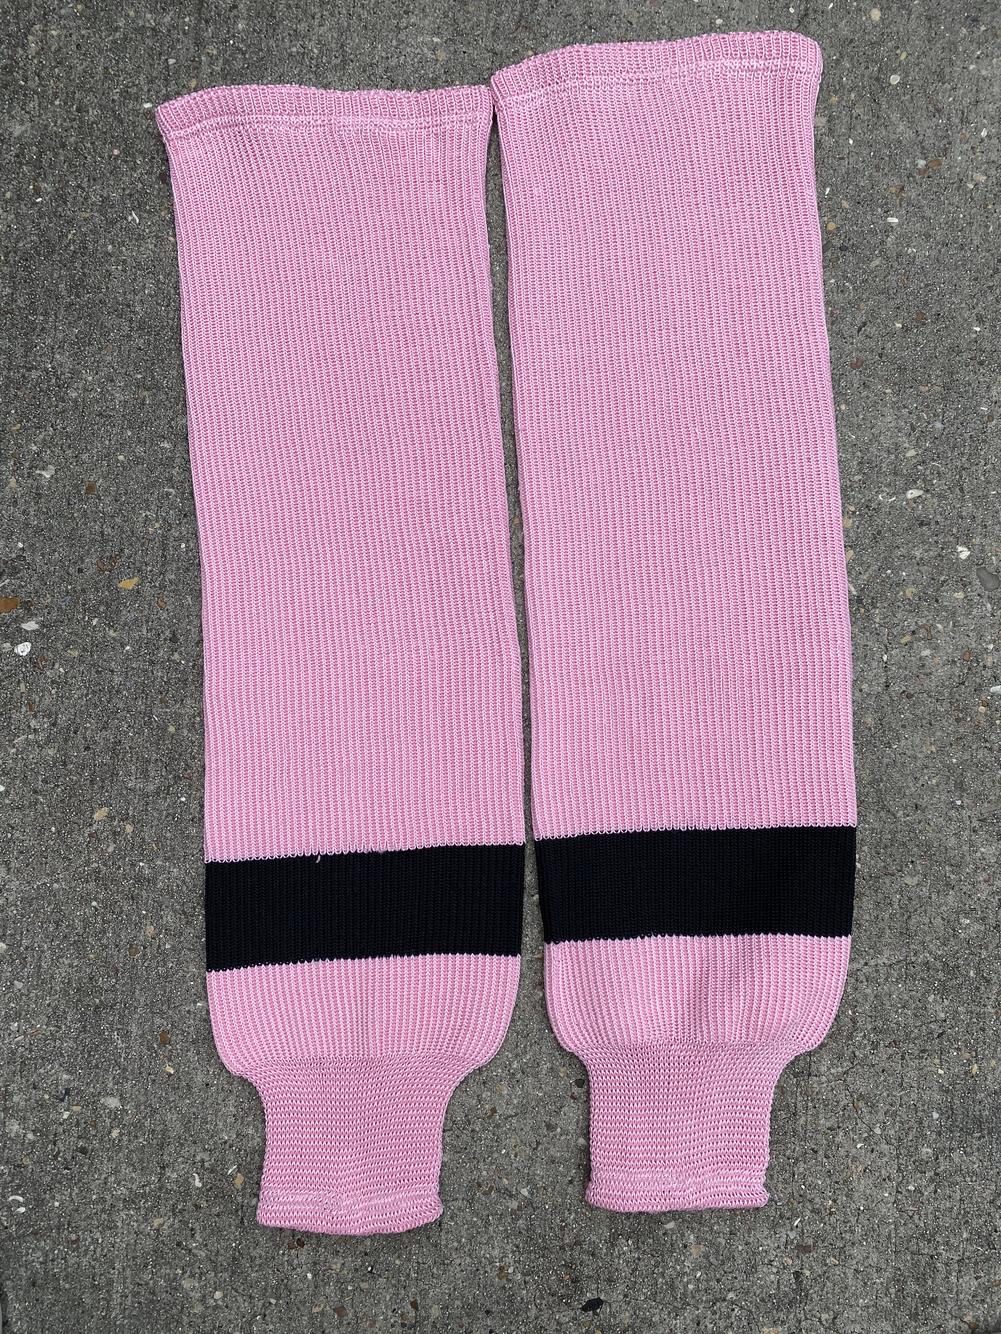 SP Edge Style Pro Stock Hockey Socks Black X-Mas One Size 9189 